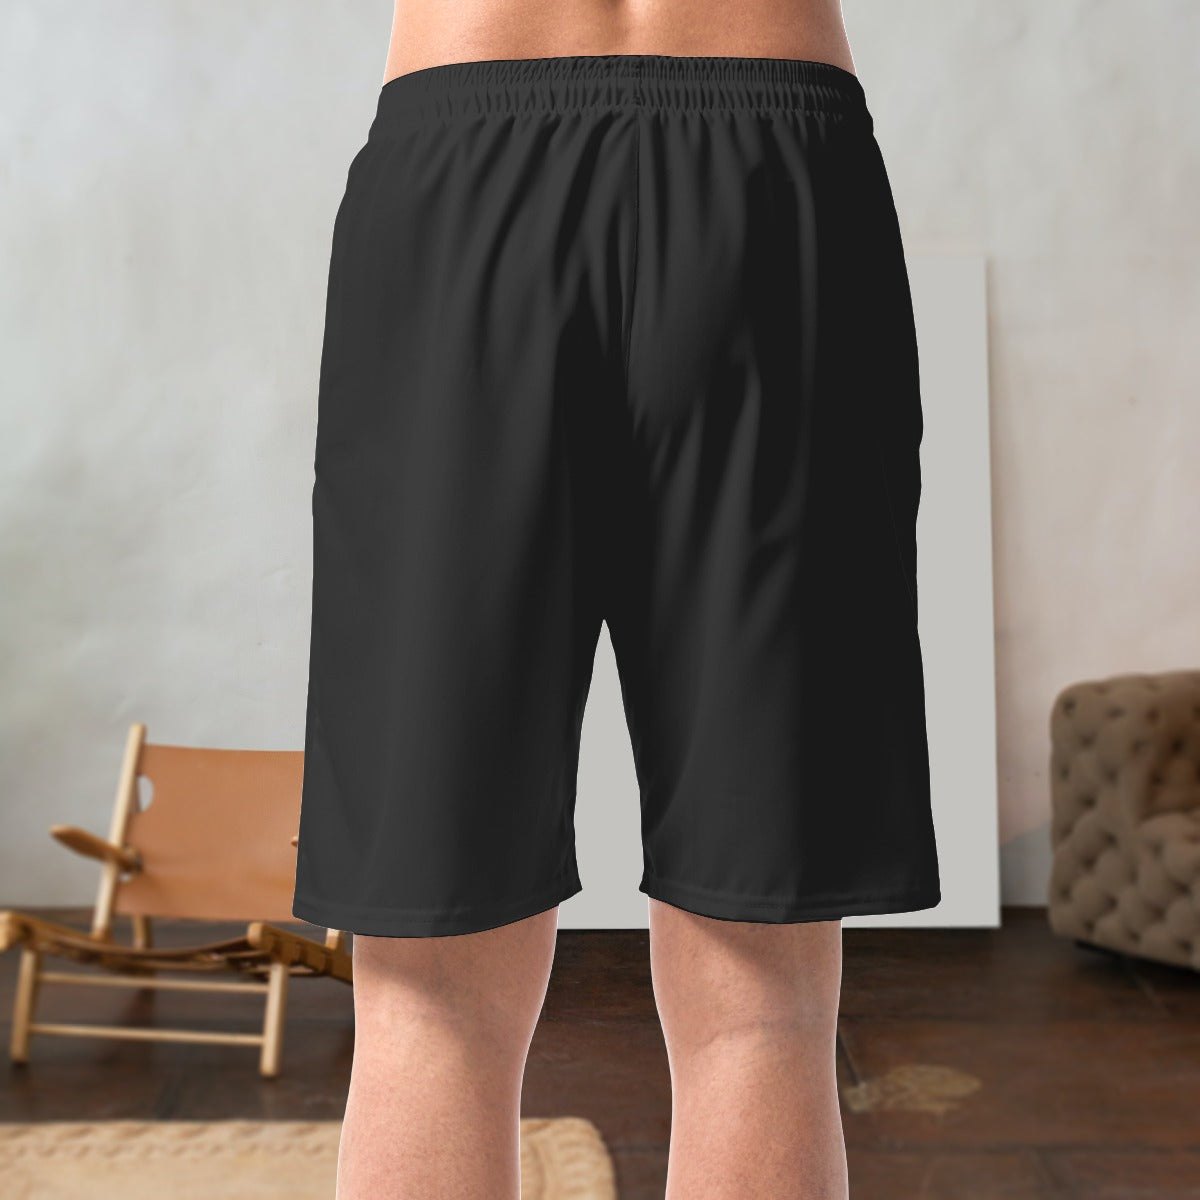 All-Over Print Men's Casual Short Pants